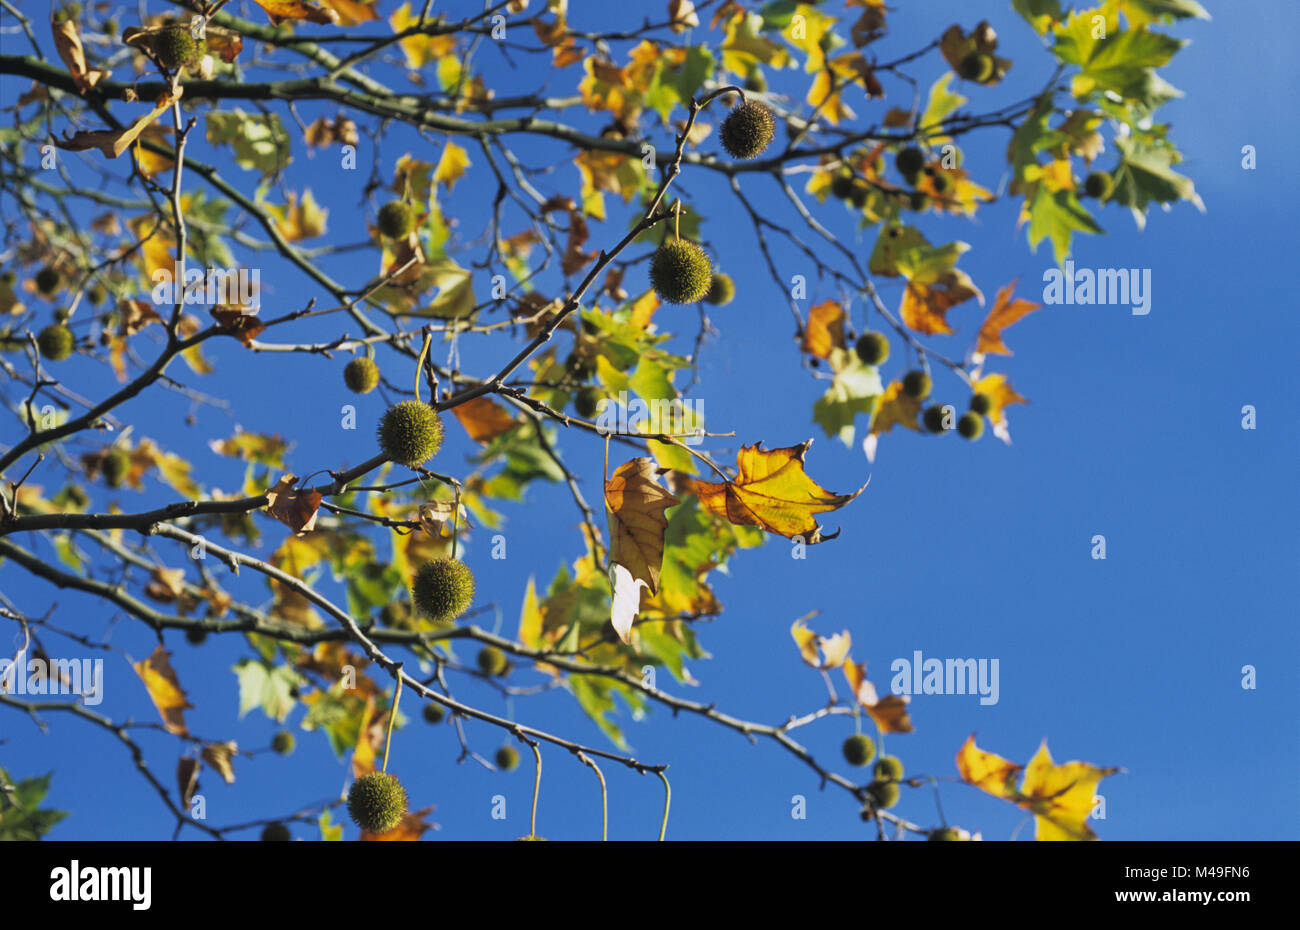 London Plane tree in autumn Stock Photo